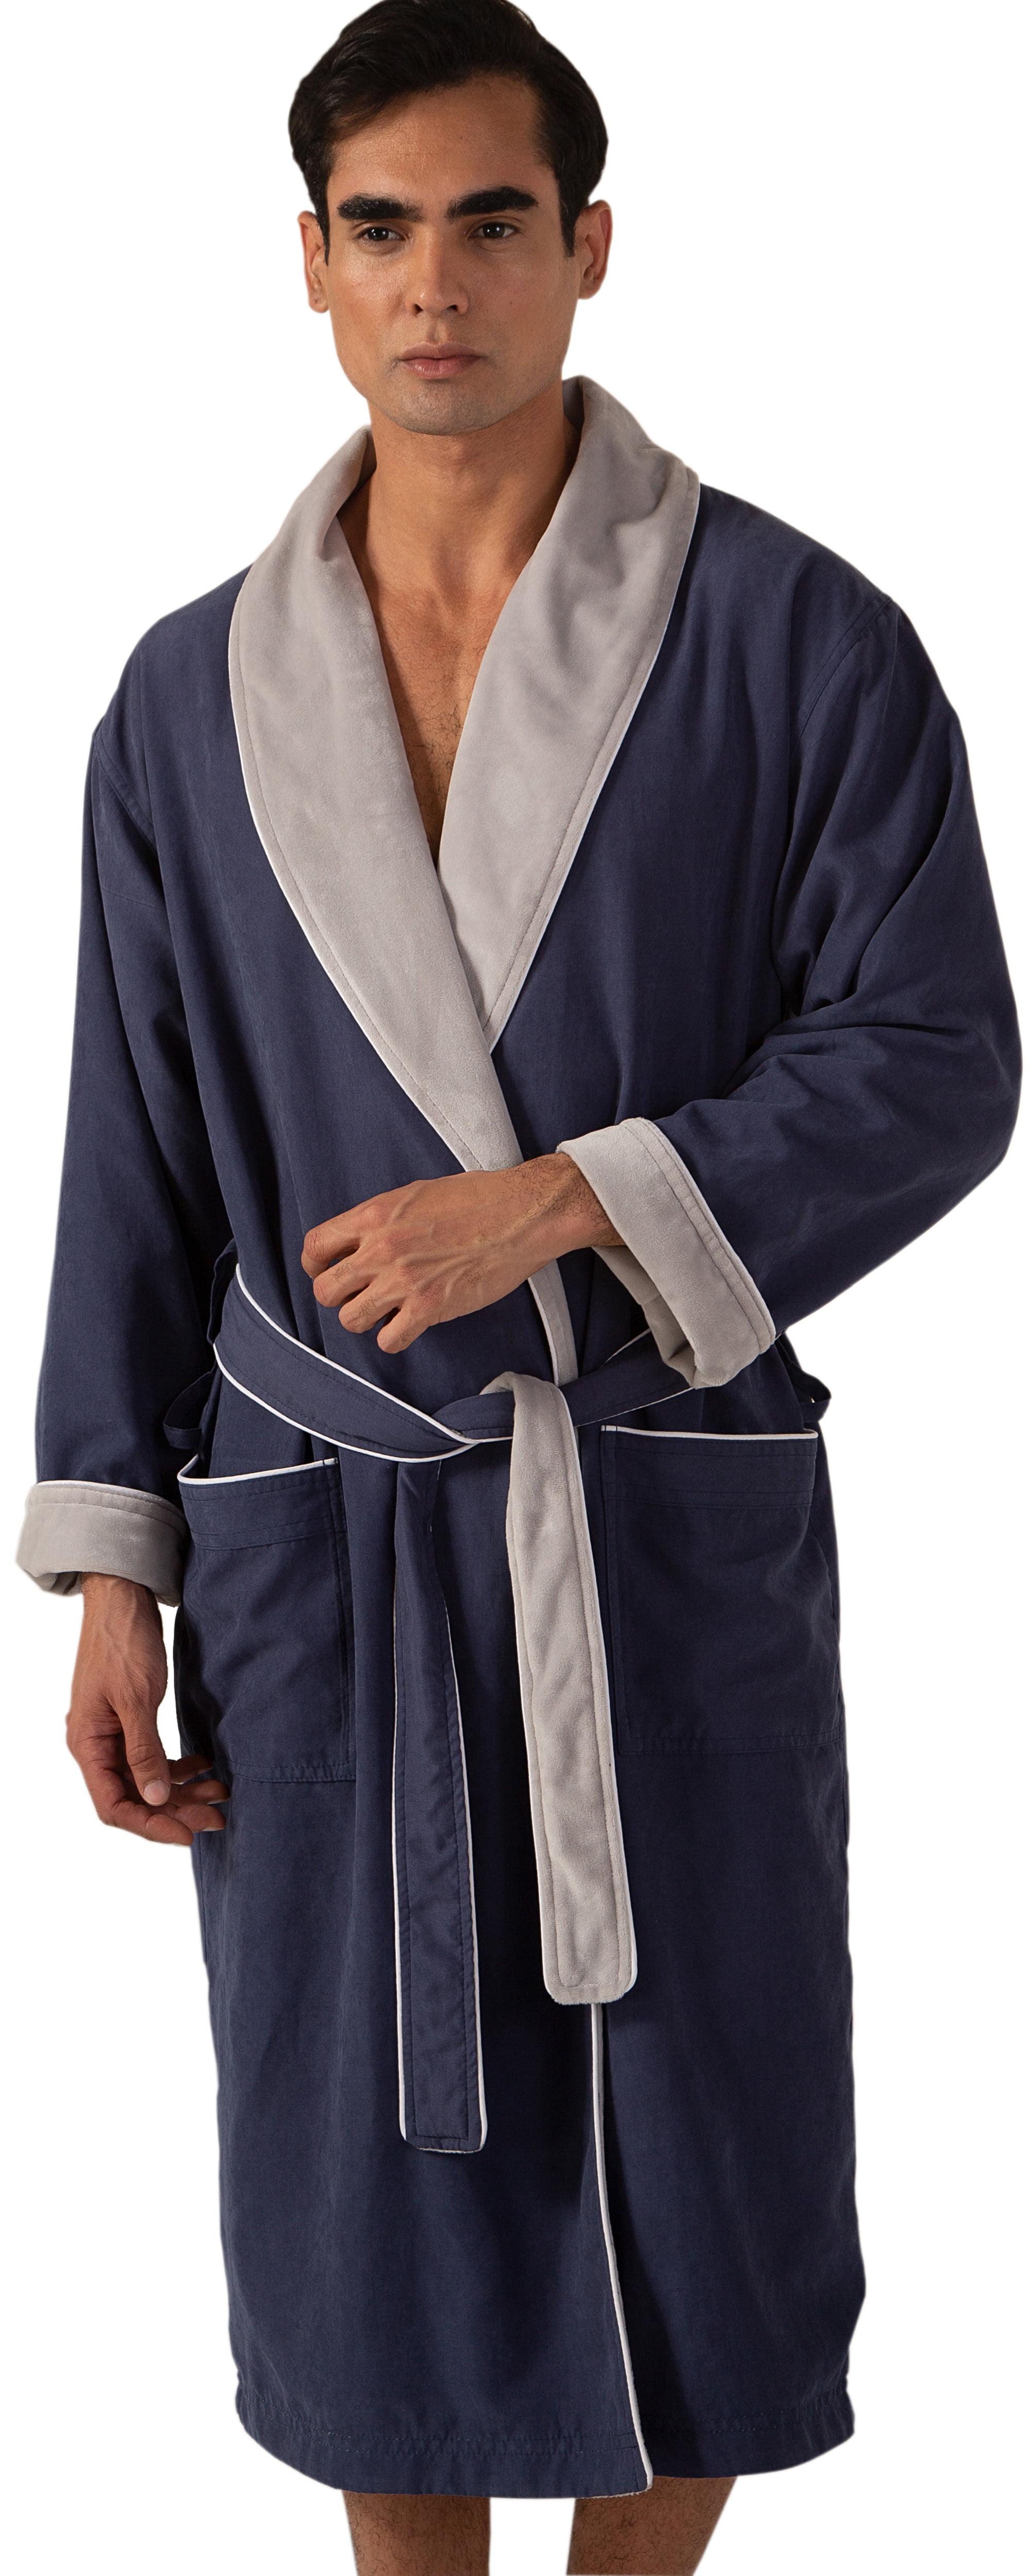 Seyante - Plush Lined Microfiber Unisex Warm Spa Robe - Luxury Hotel Robe, Spa Bathrobe for Men 